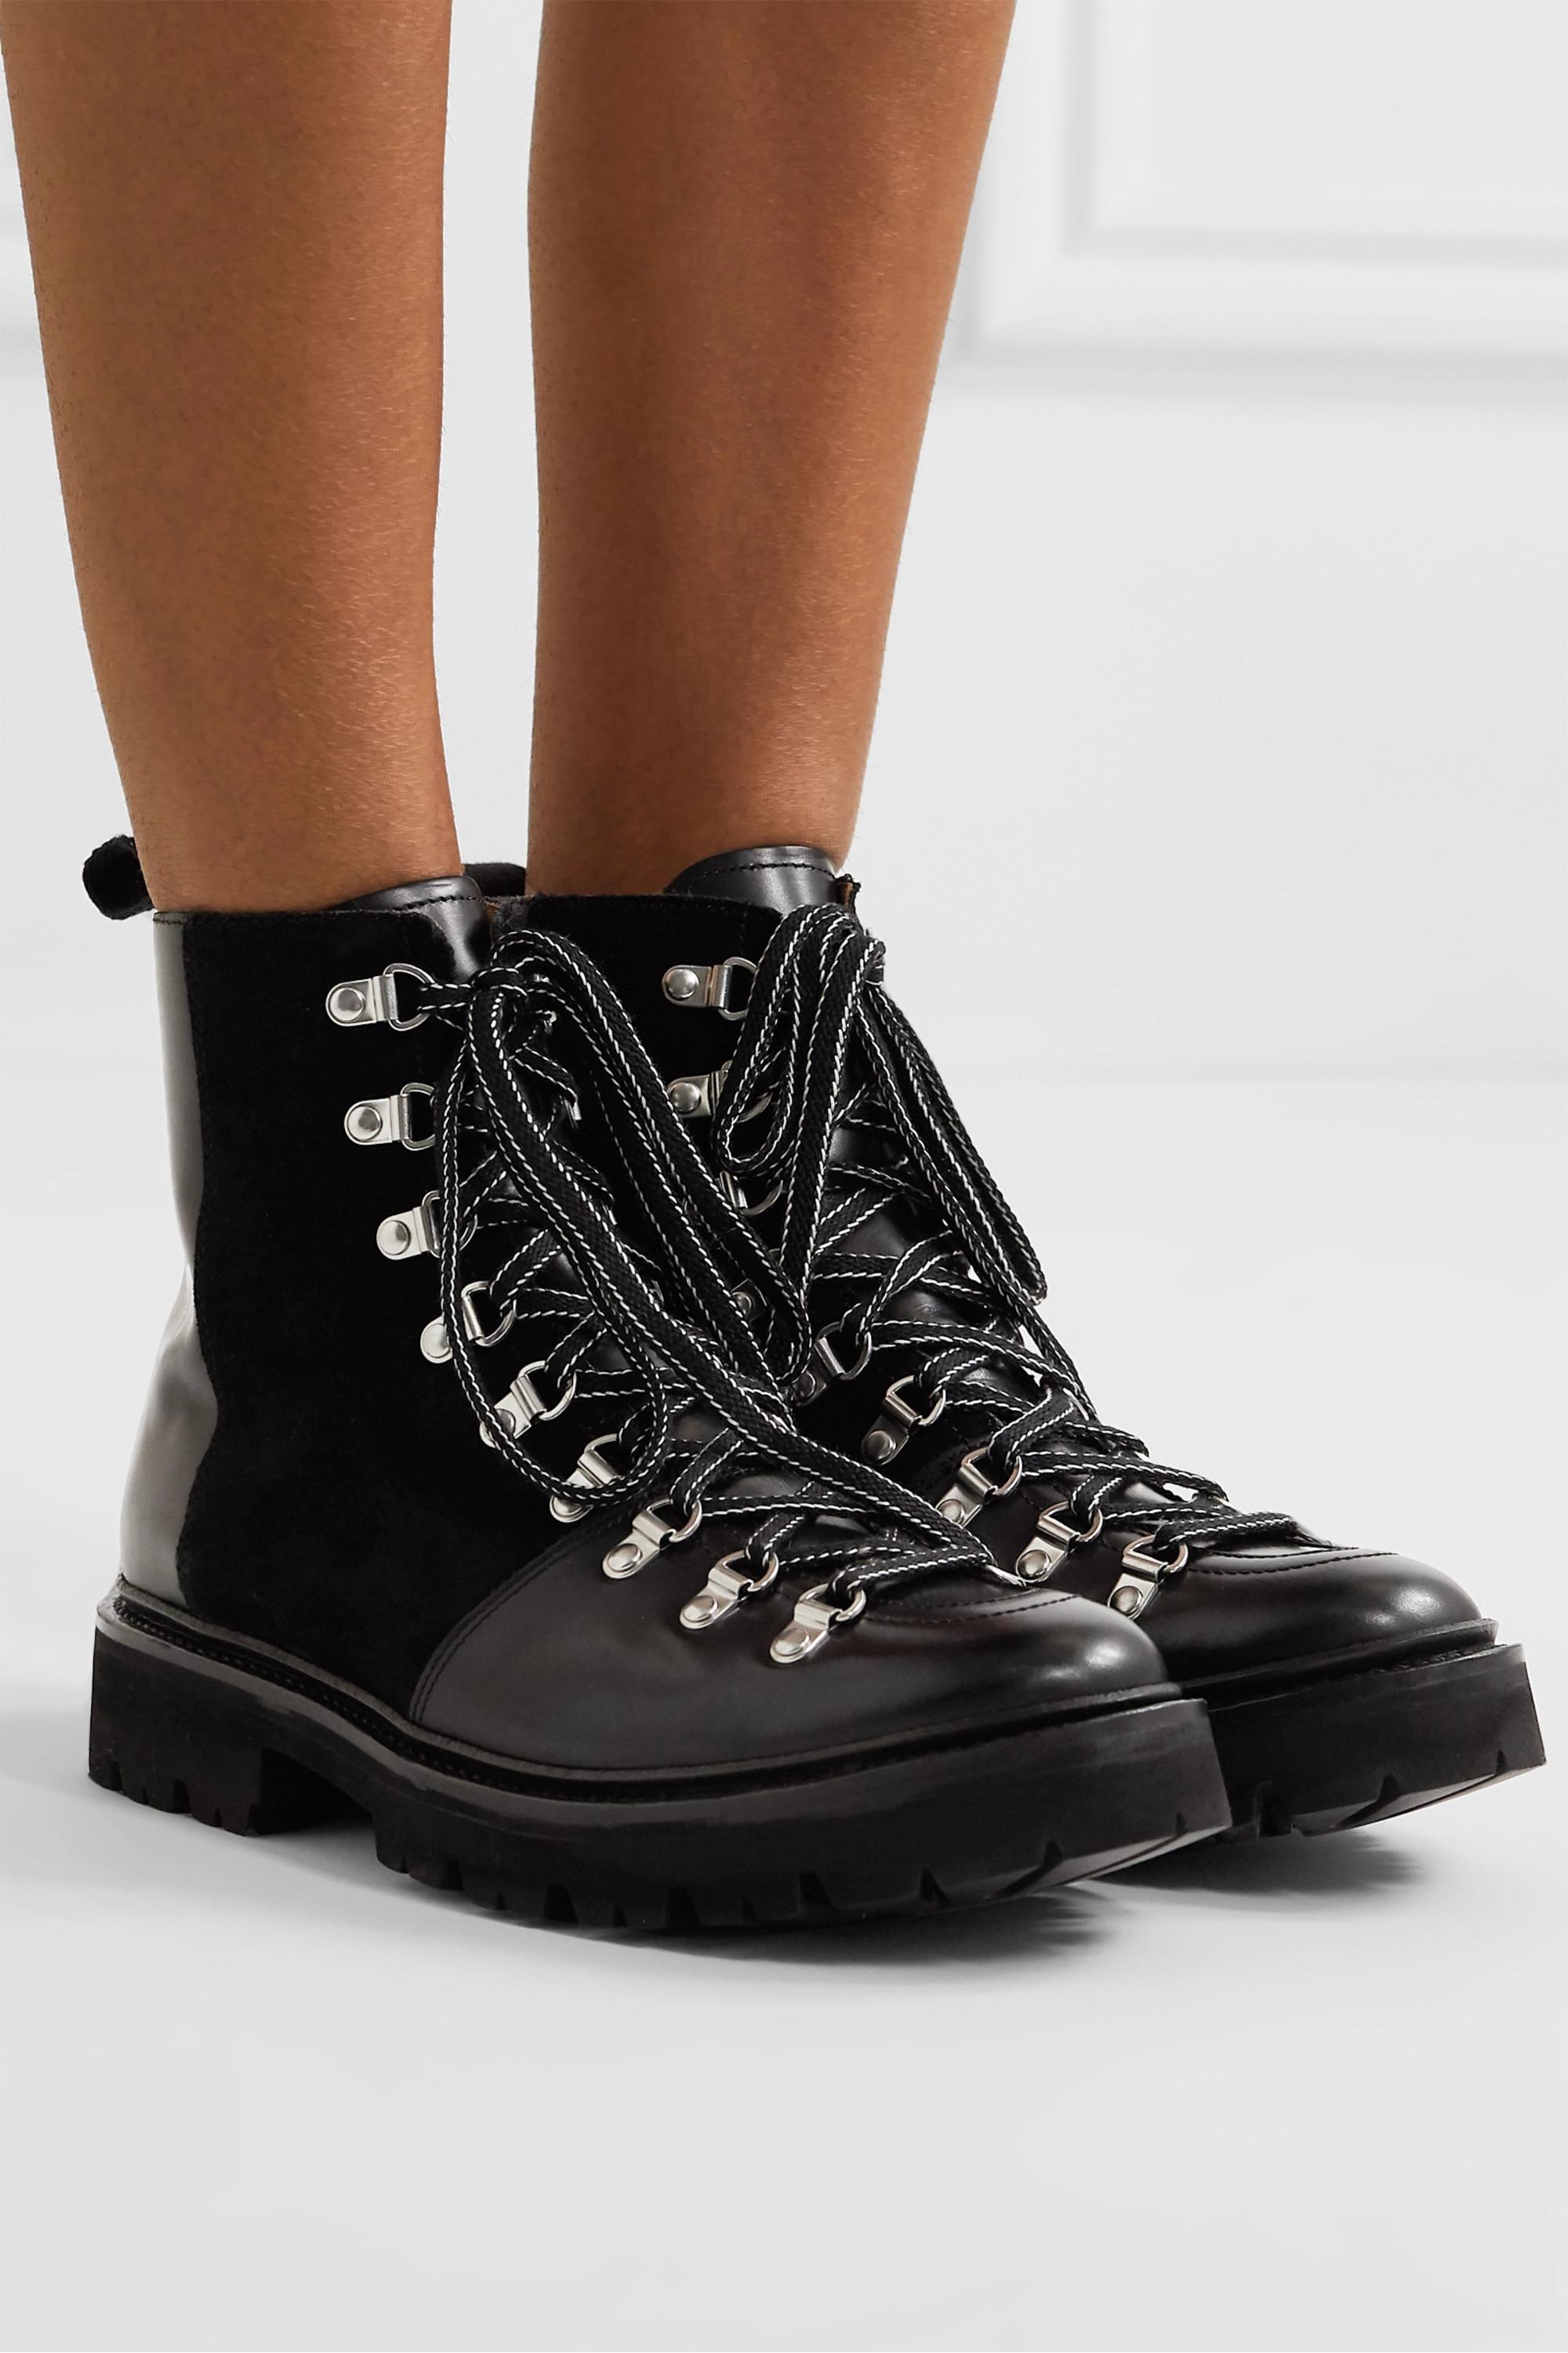 nanette grenson boots black